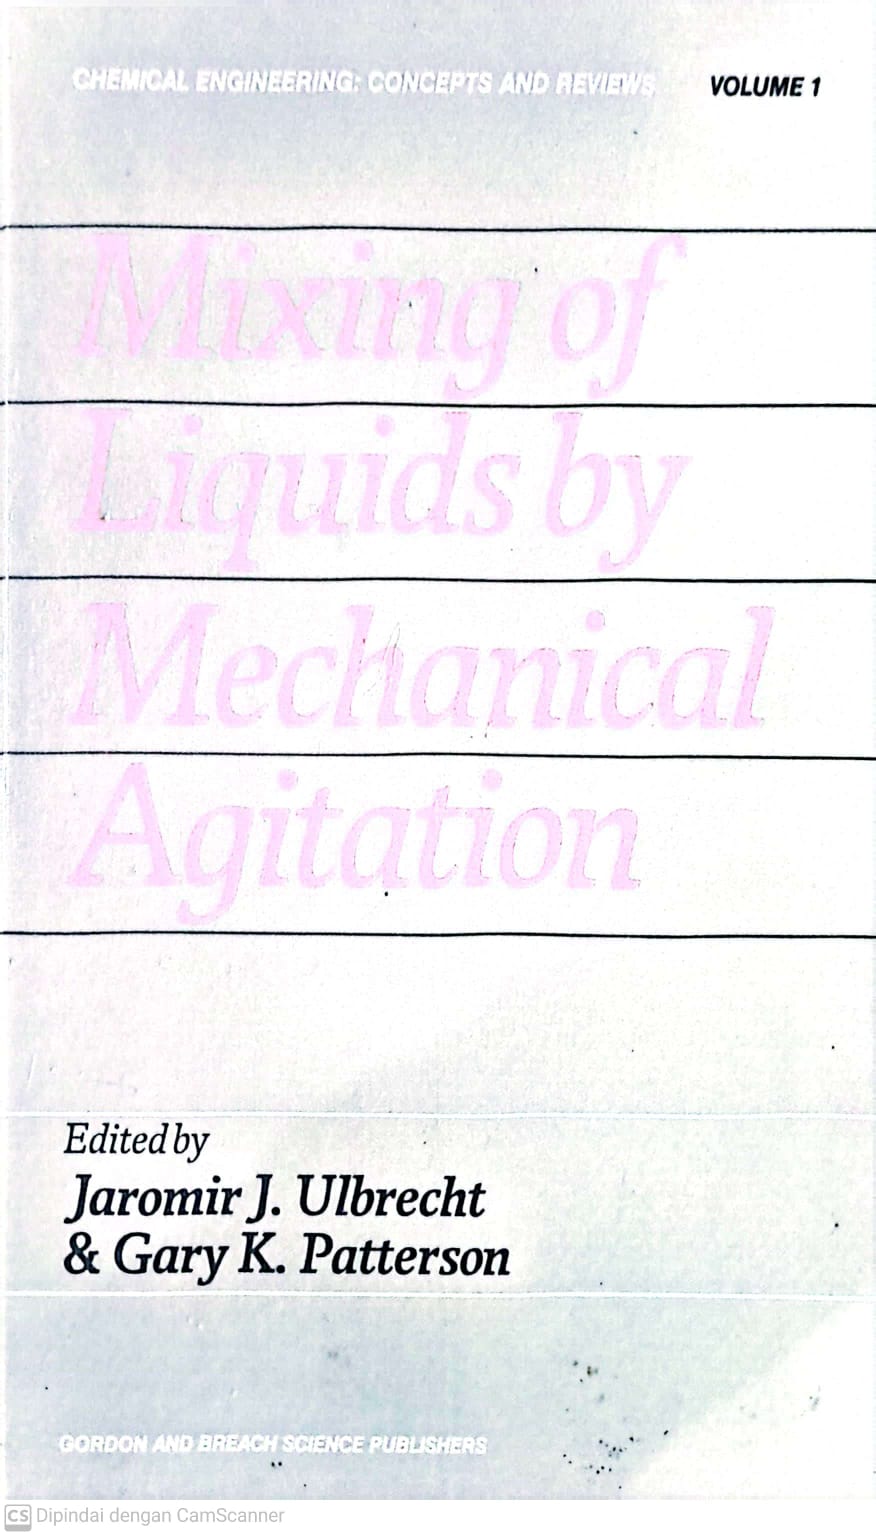 Mixing of Liquids by Mechanical Agitation